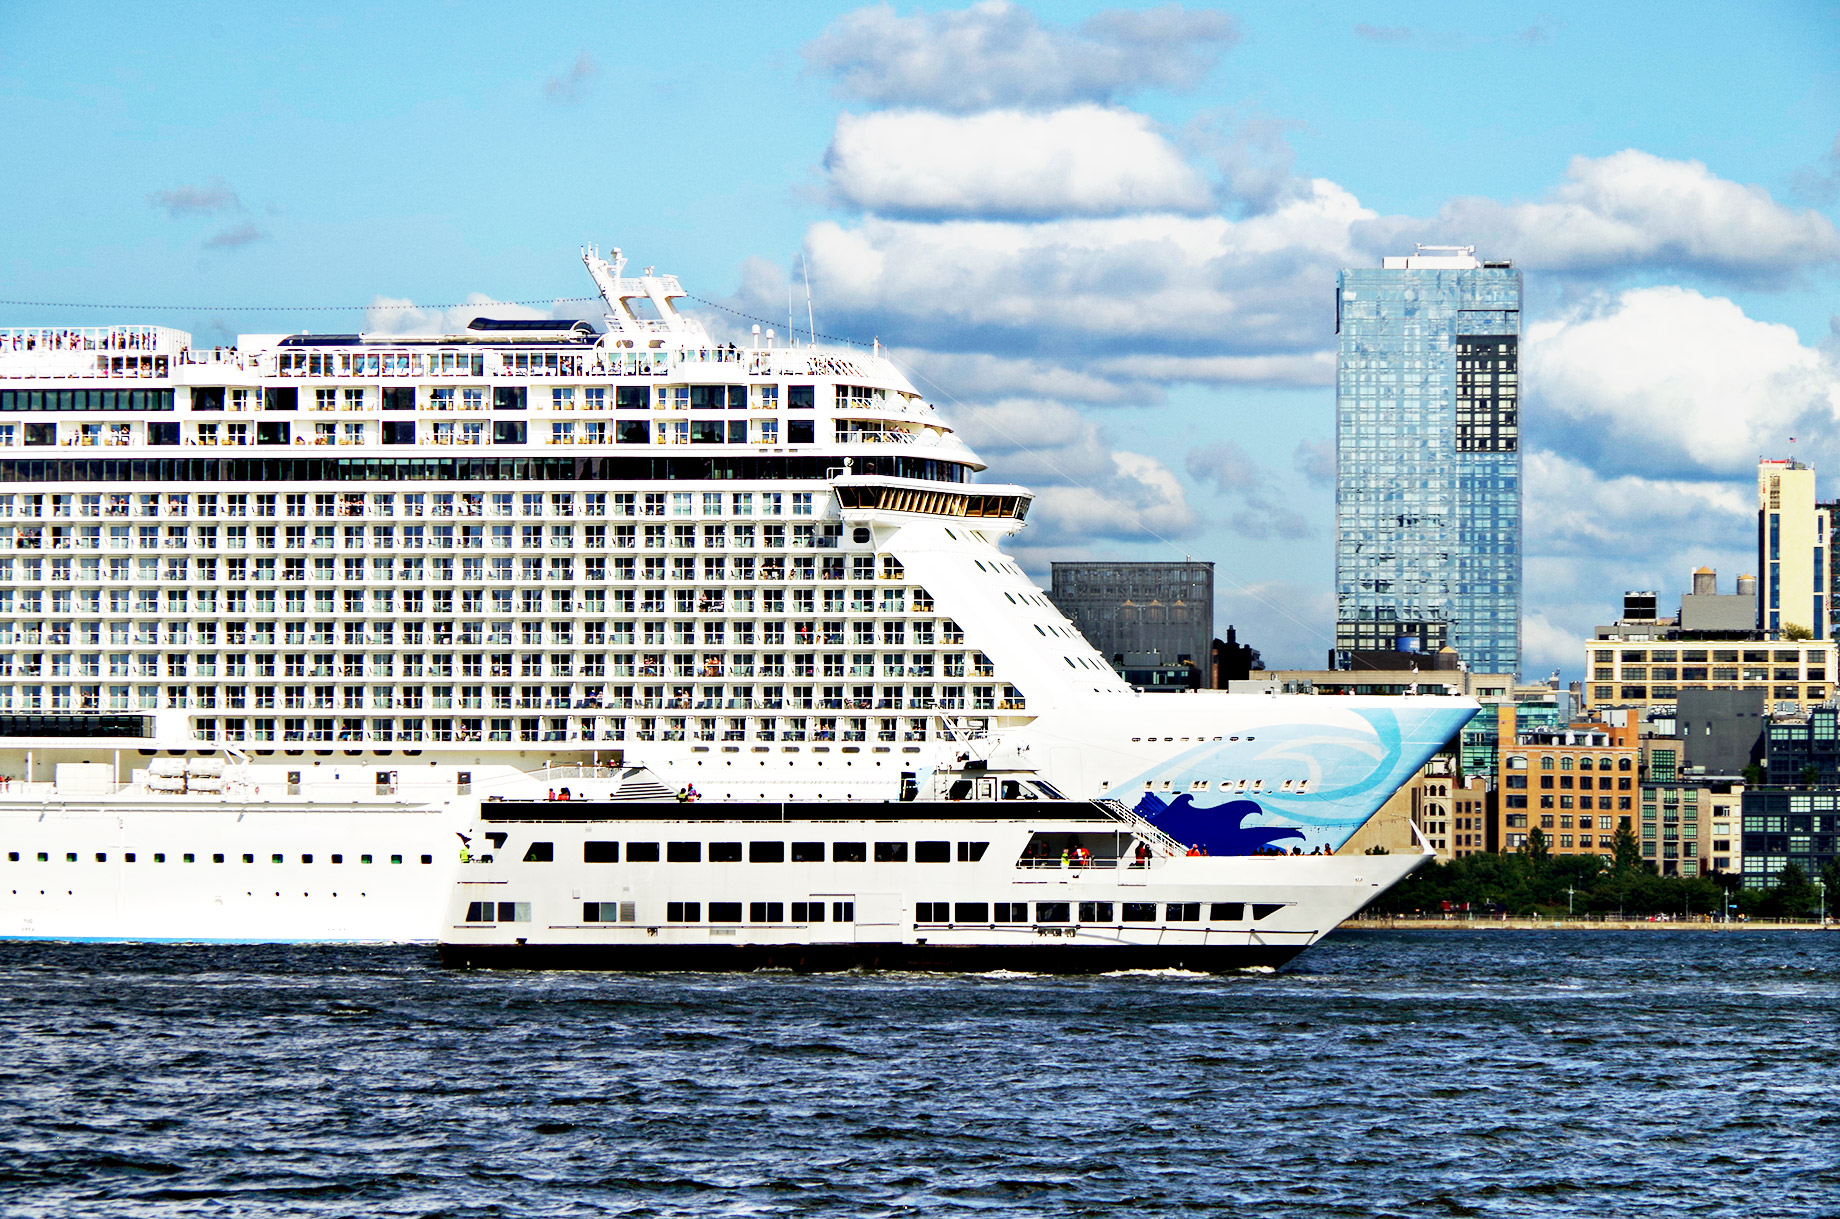 Norwegian Escape Cruise Line - Hudson River, New York City, NY, USA